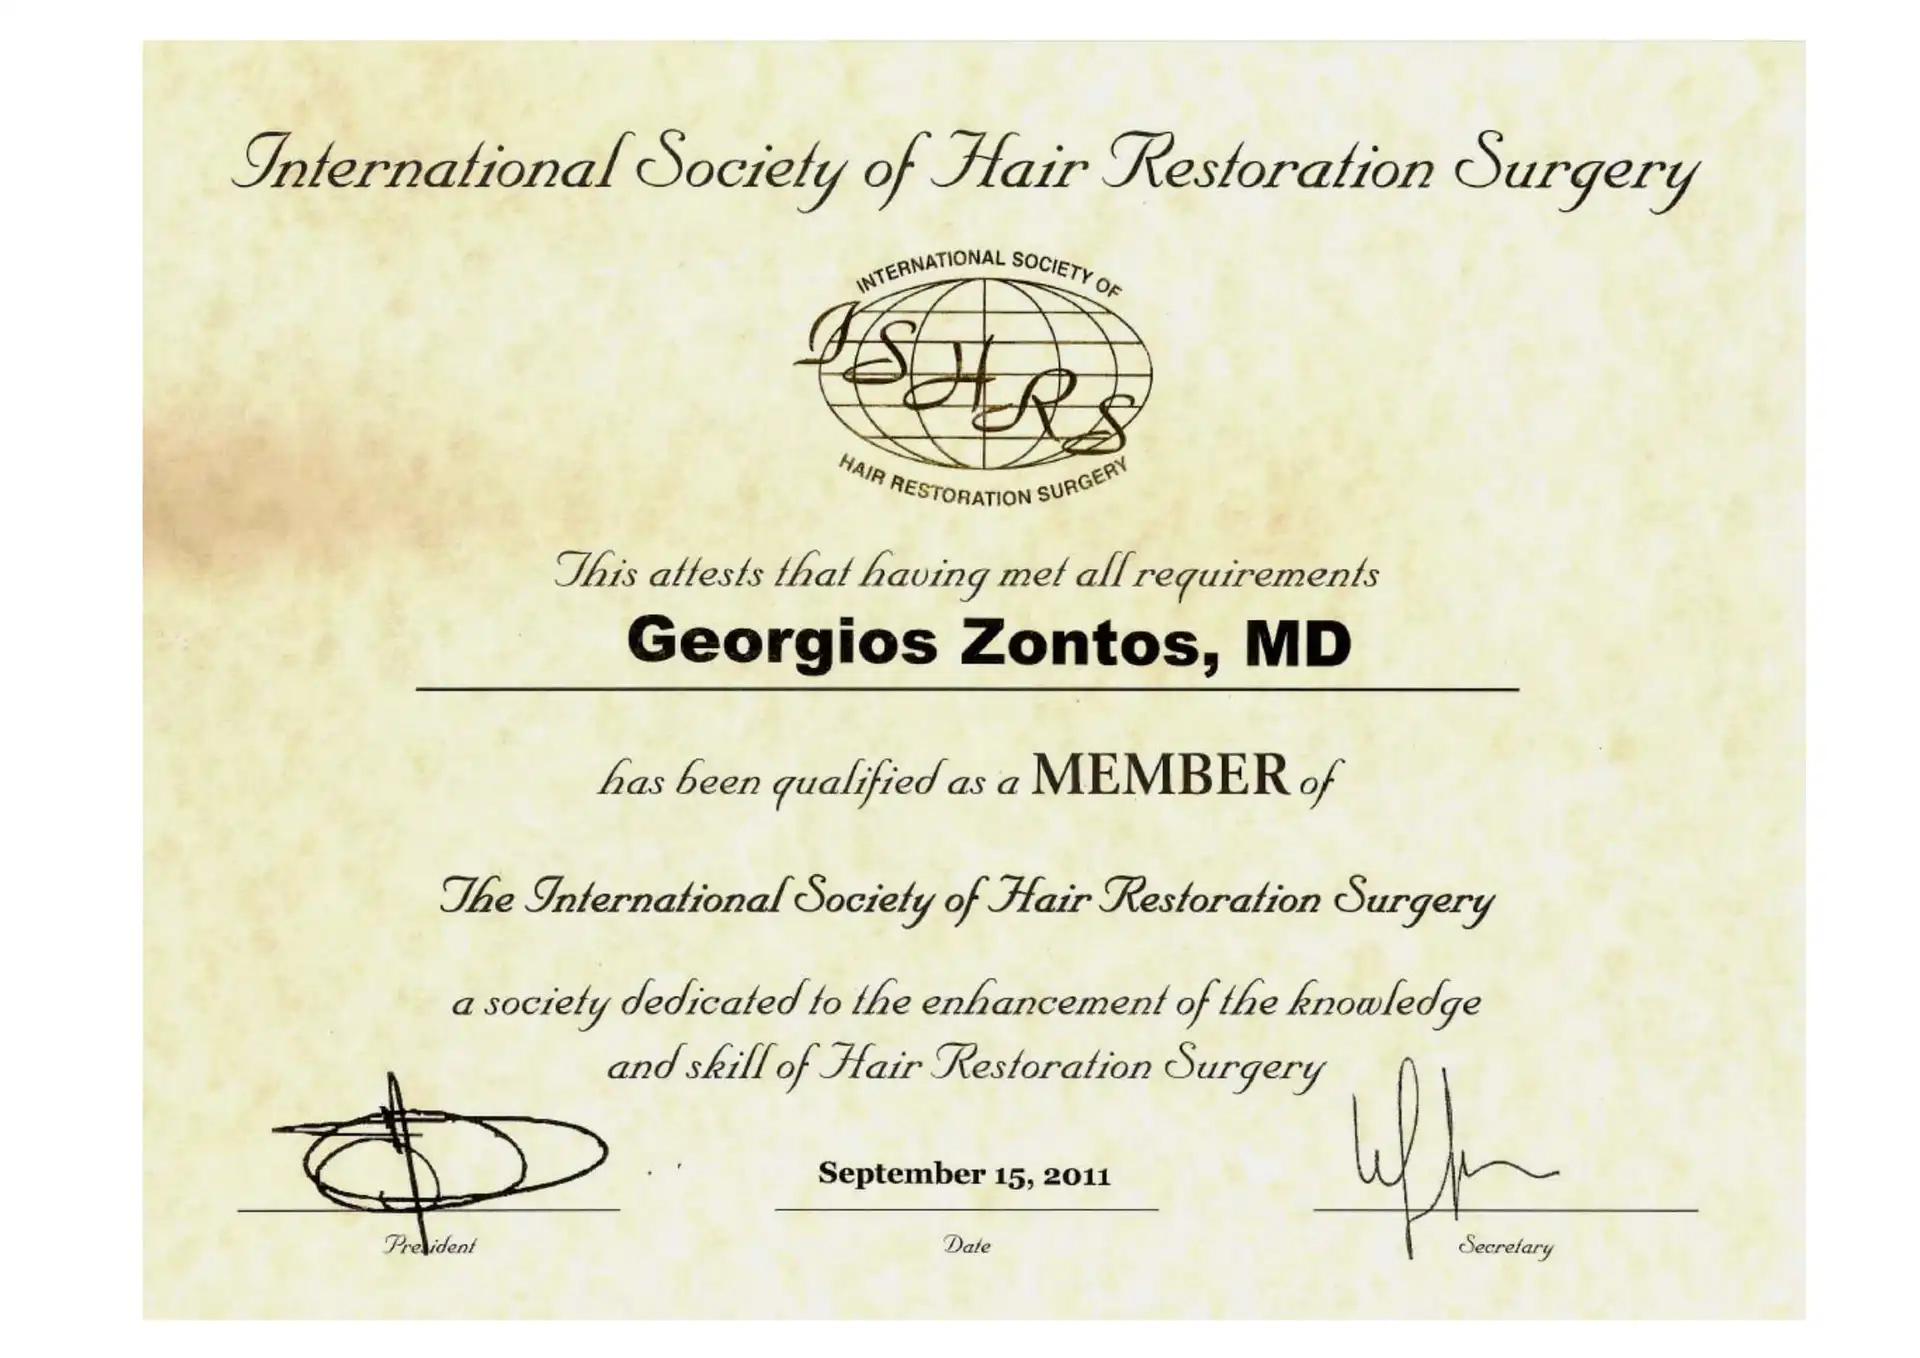 Dr Zontos membership status by ISHRS